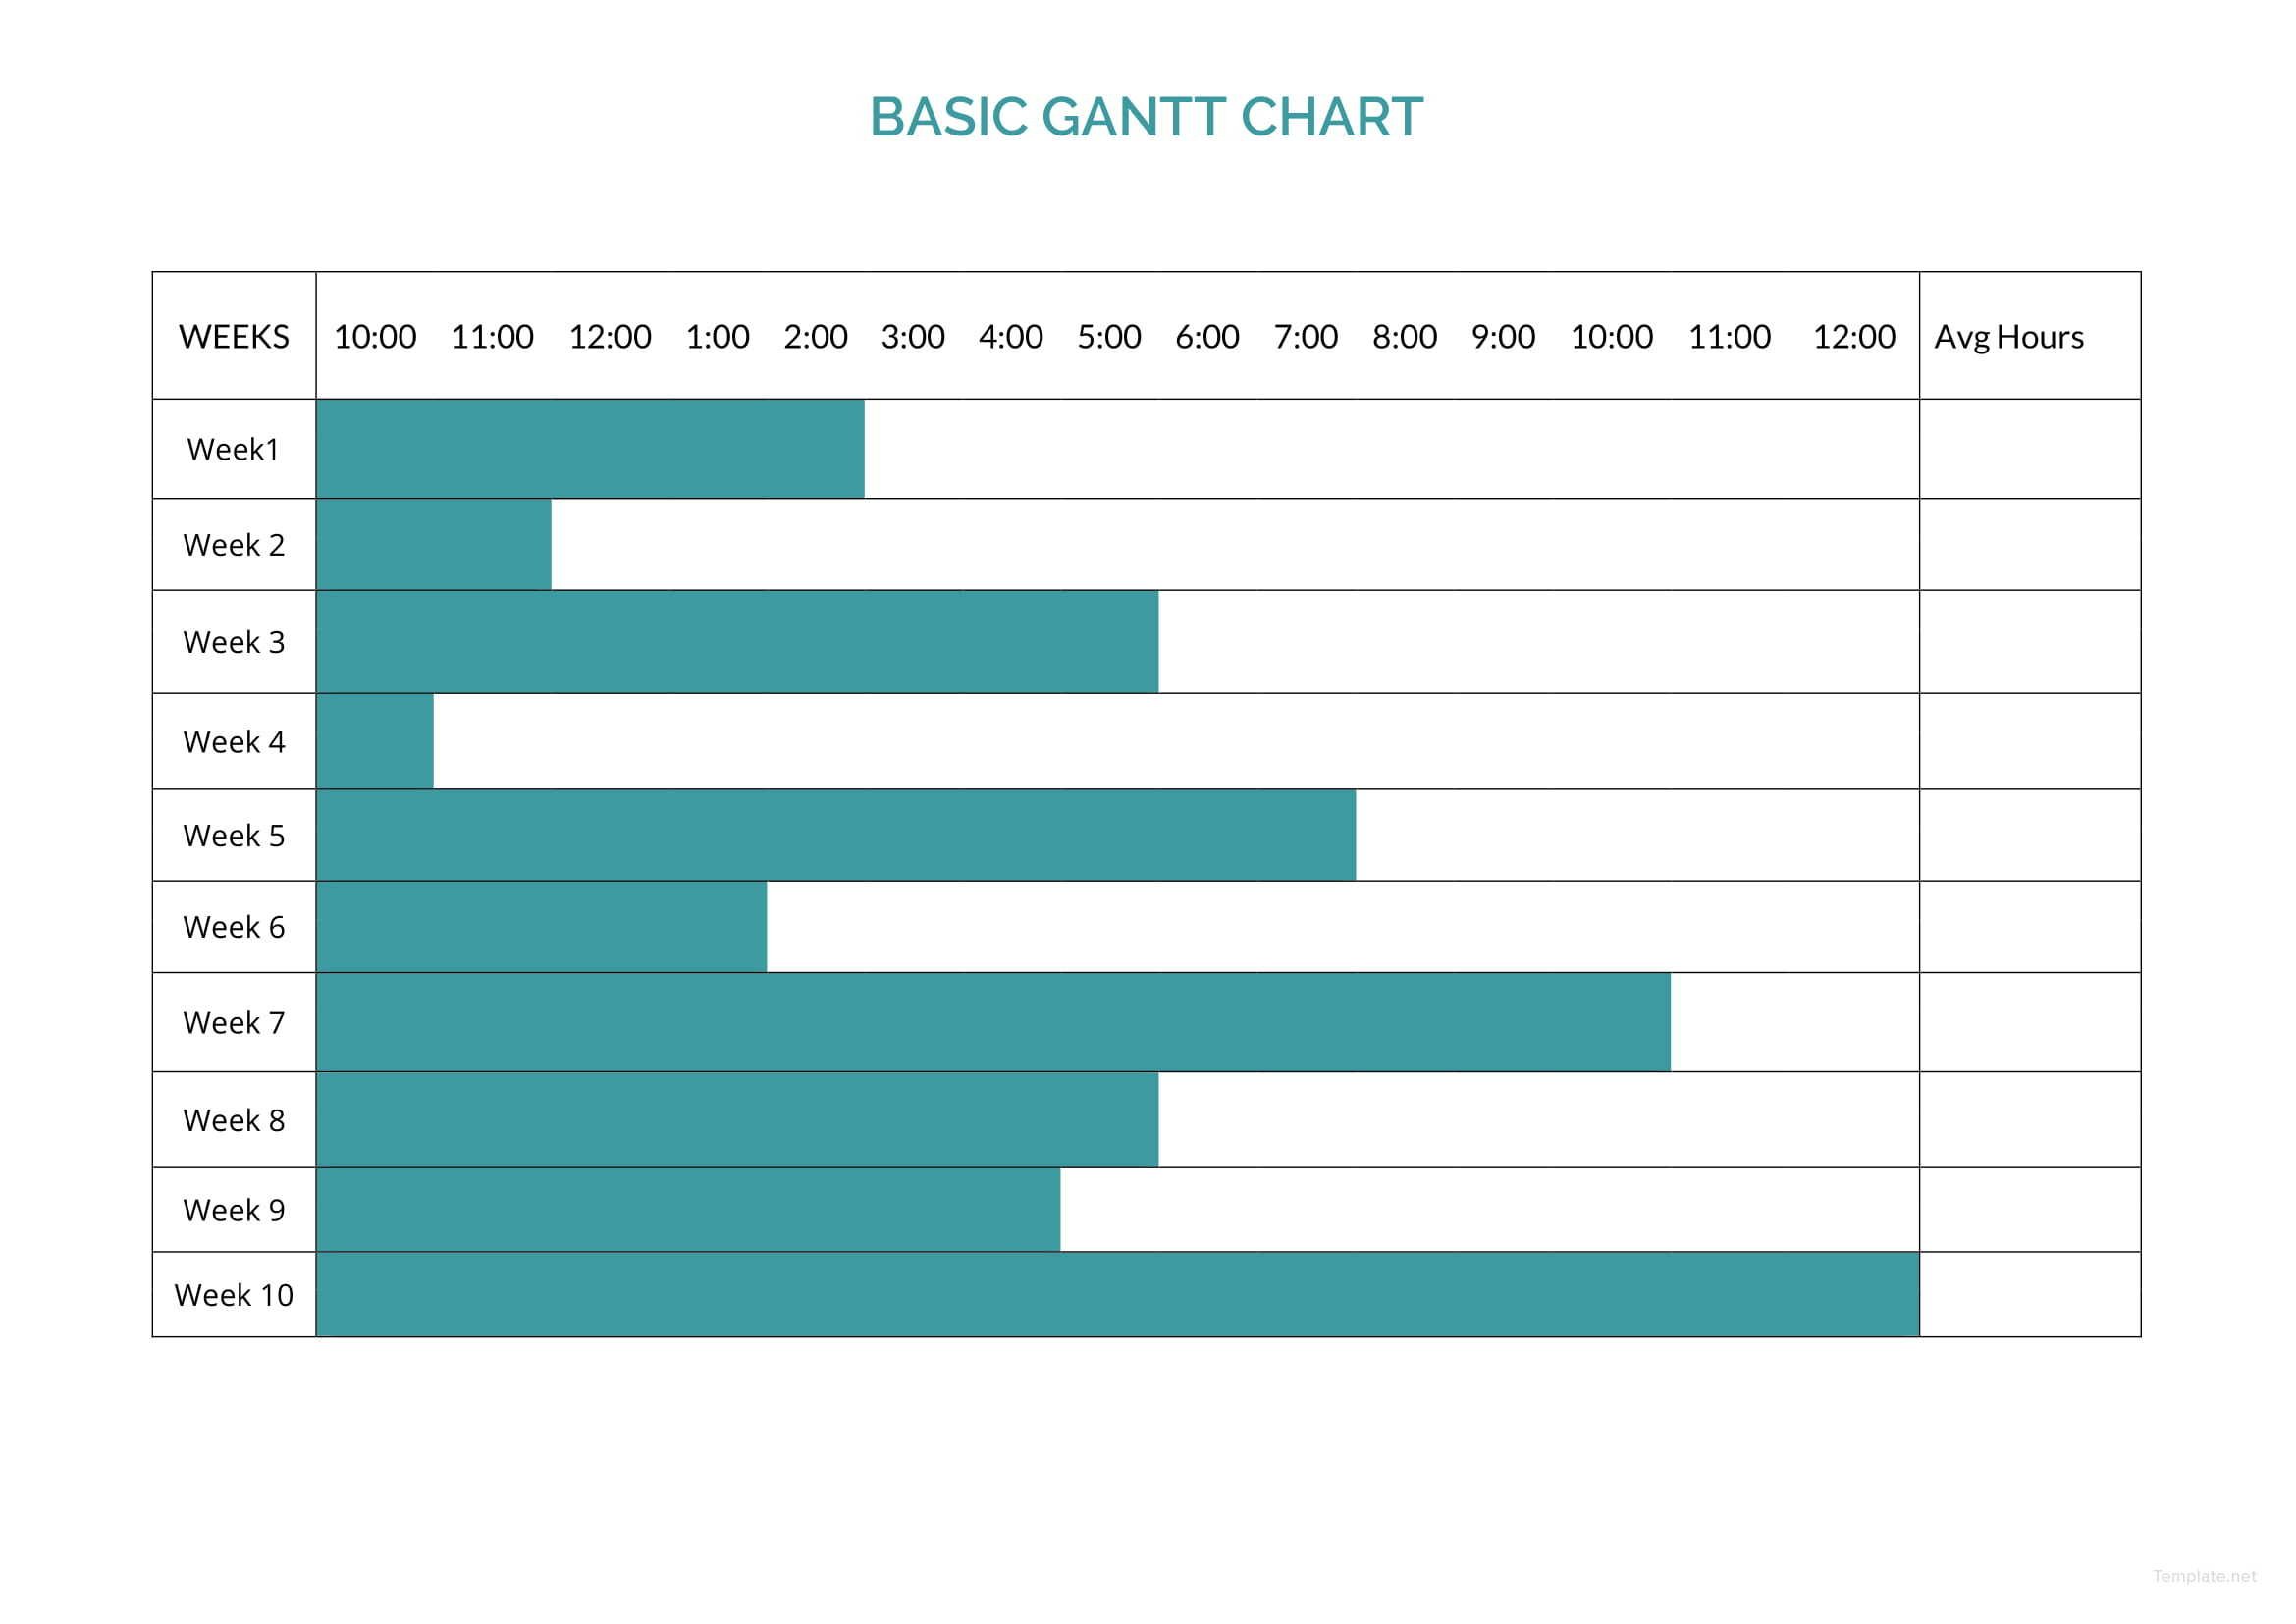 Basic Gantt Chart Template in Microsoft Word Excel Template net